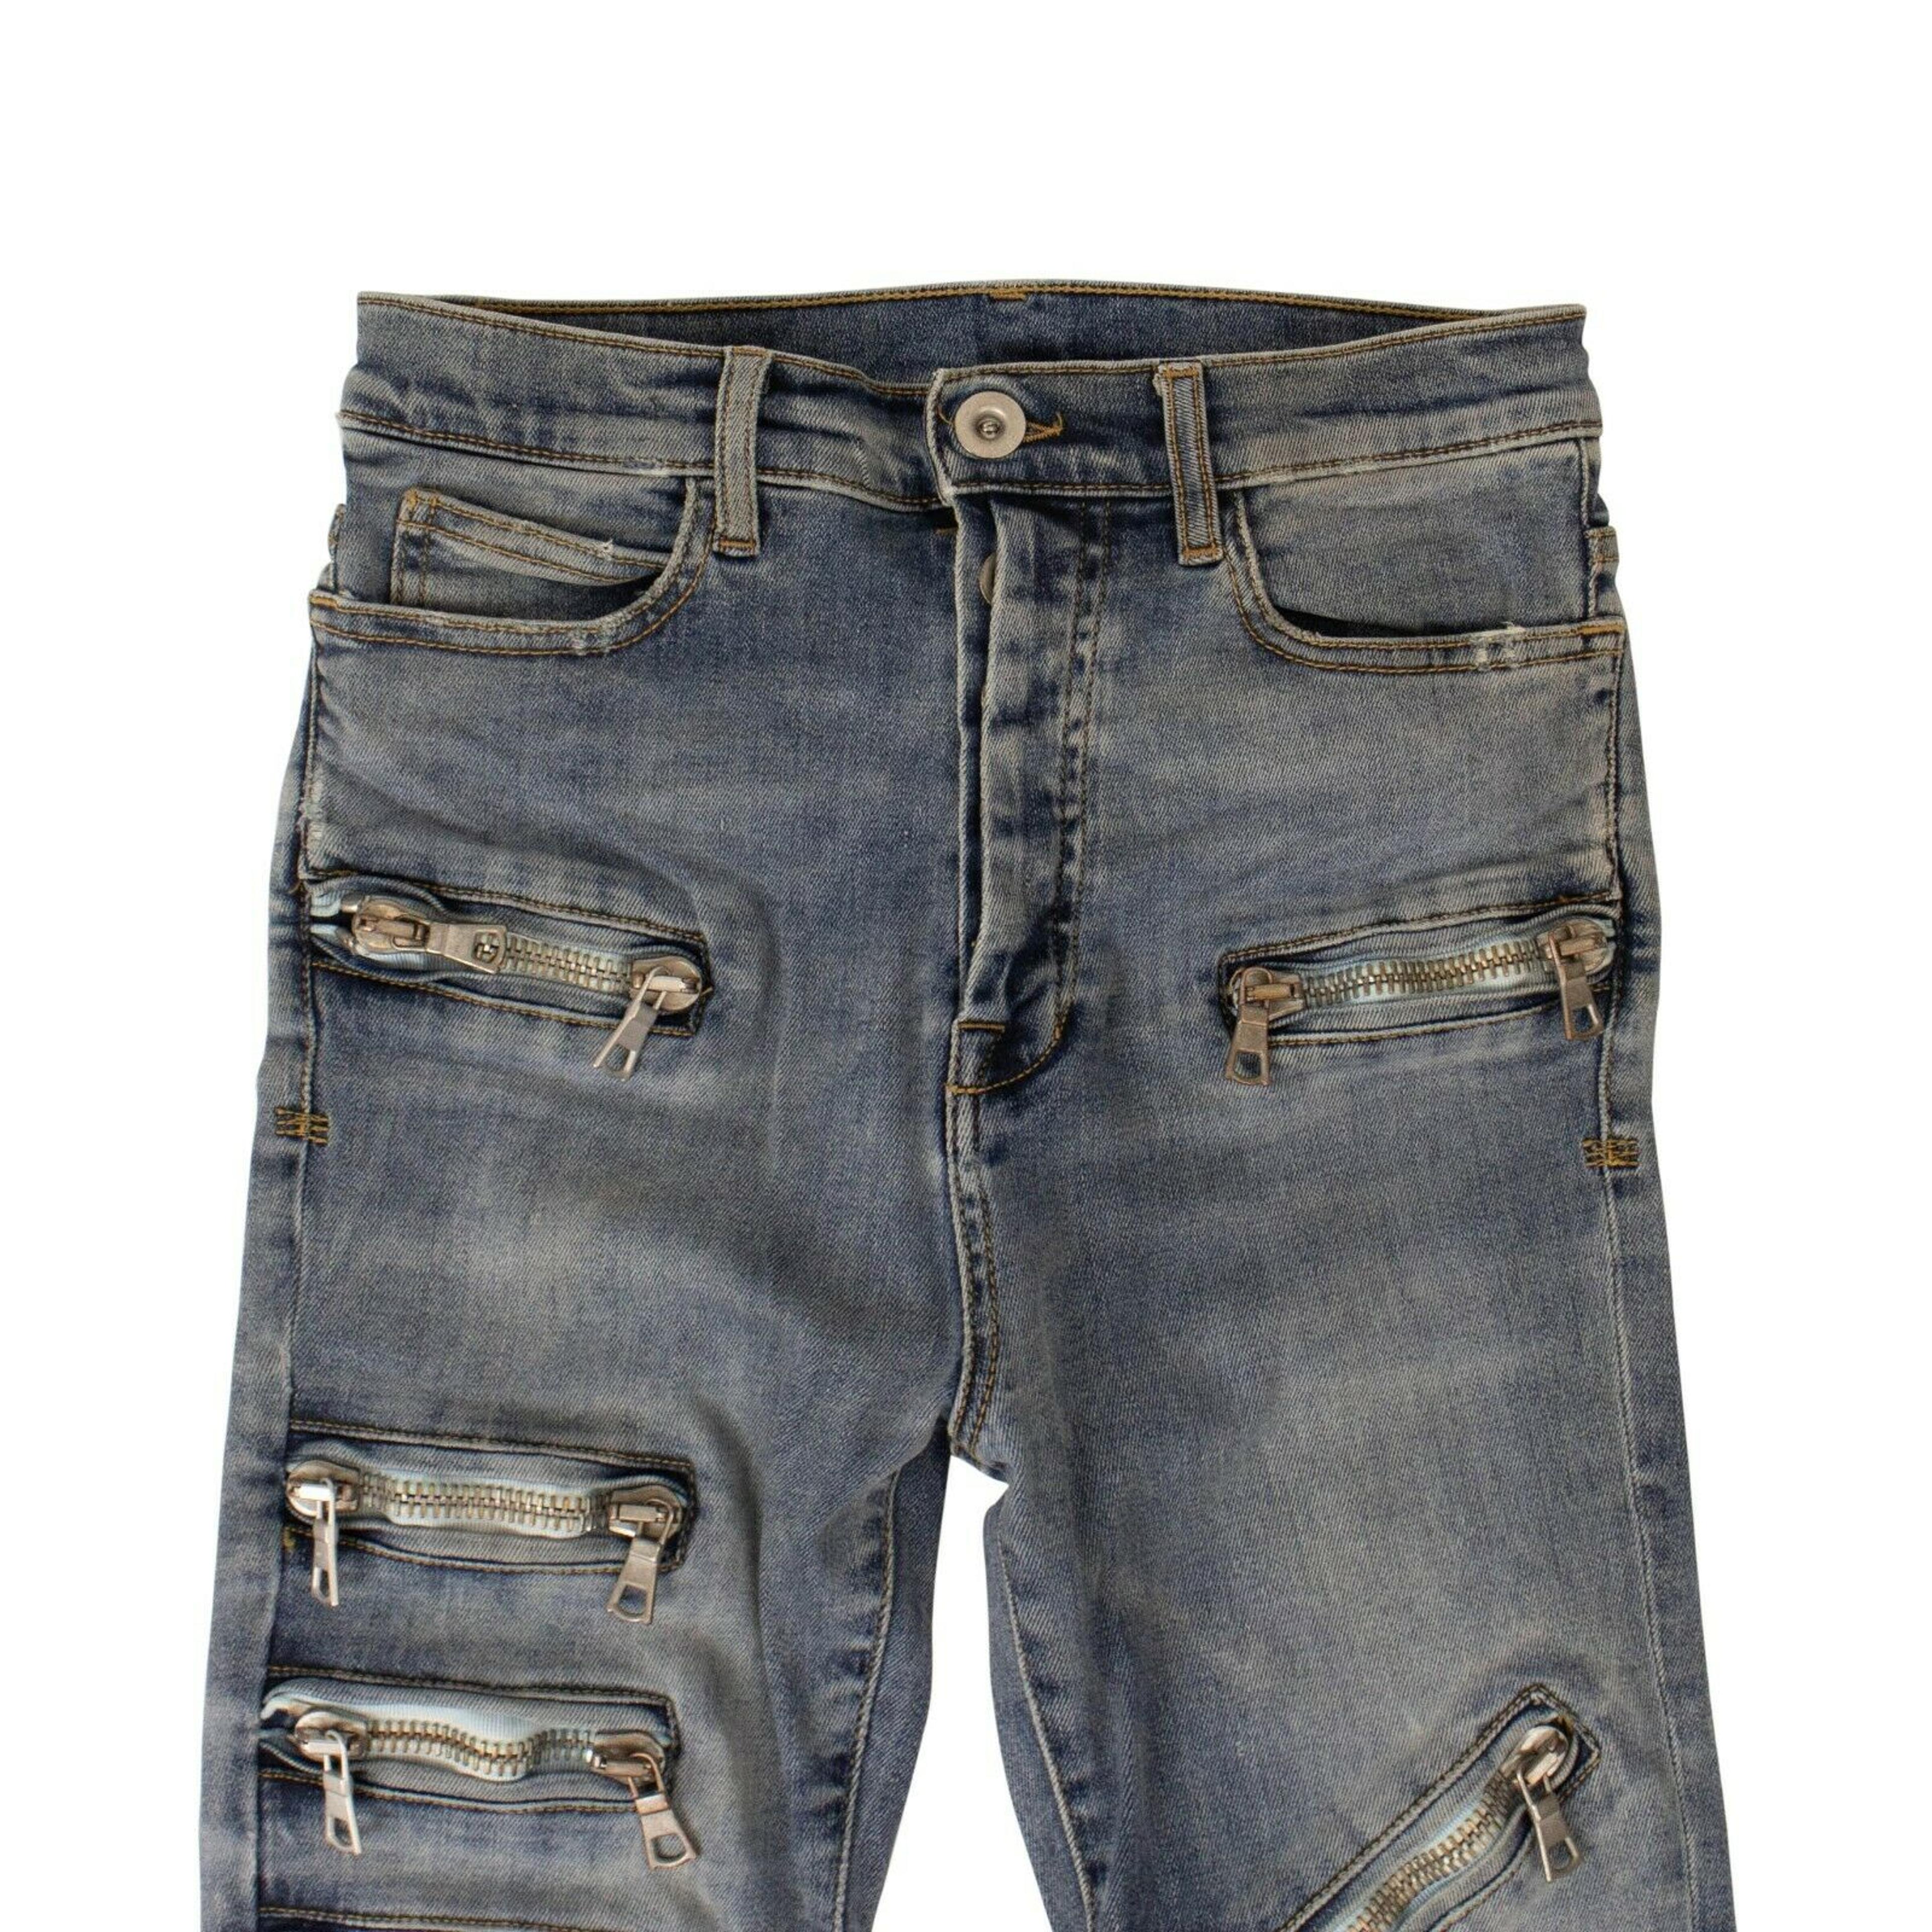 Alternate View 1 of Unravel Project Moonwash Multi-Zip Jeans - Denim